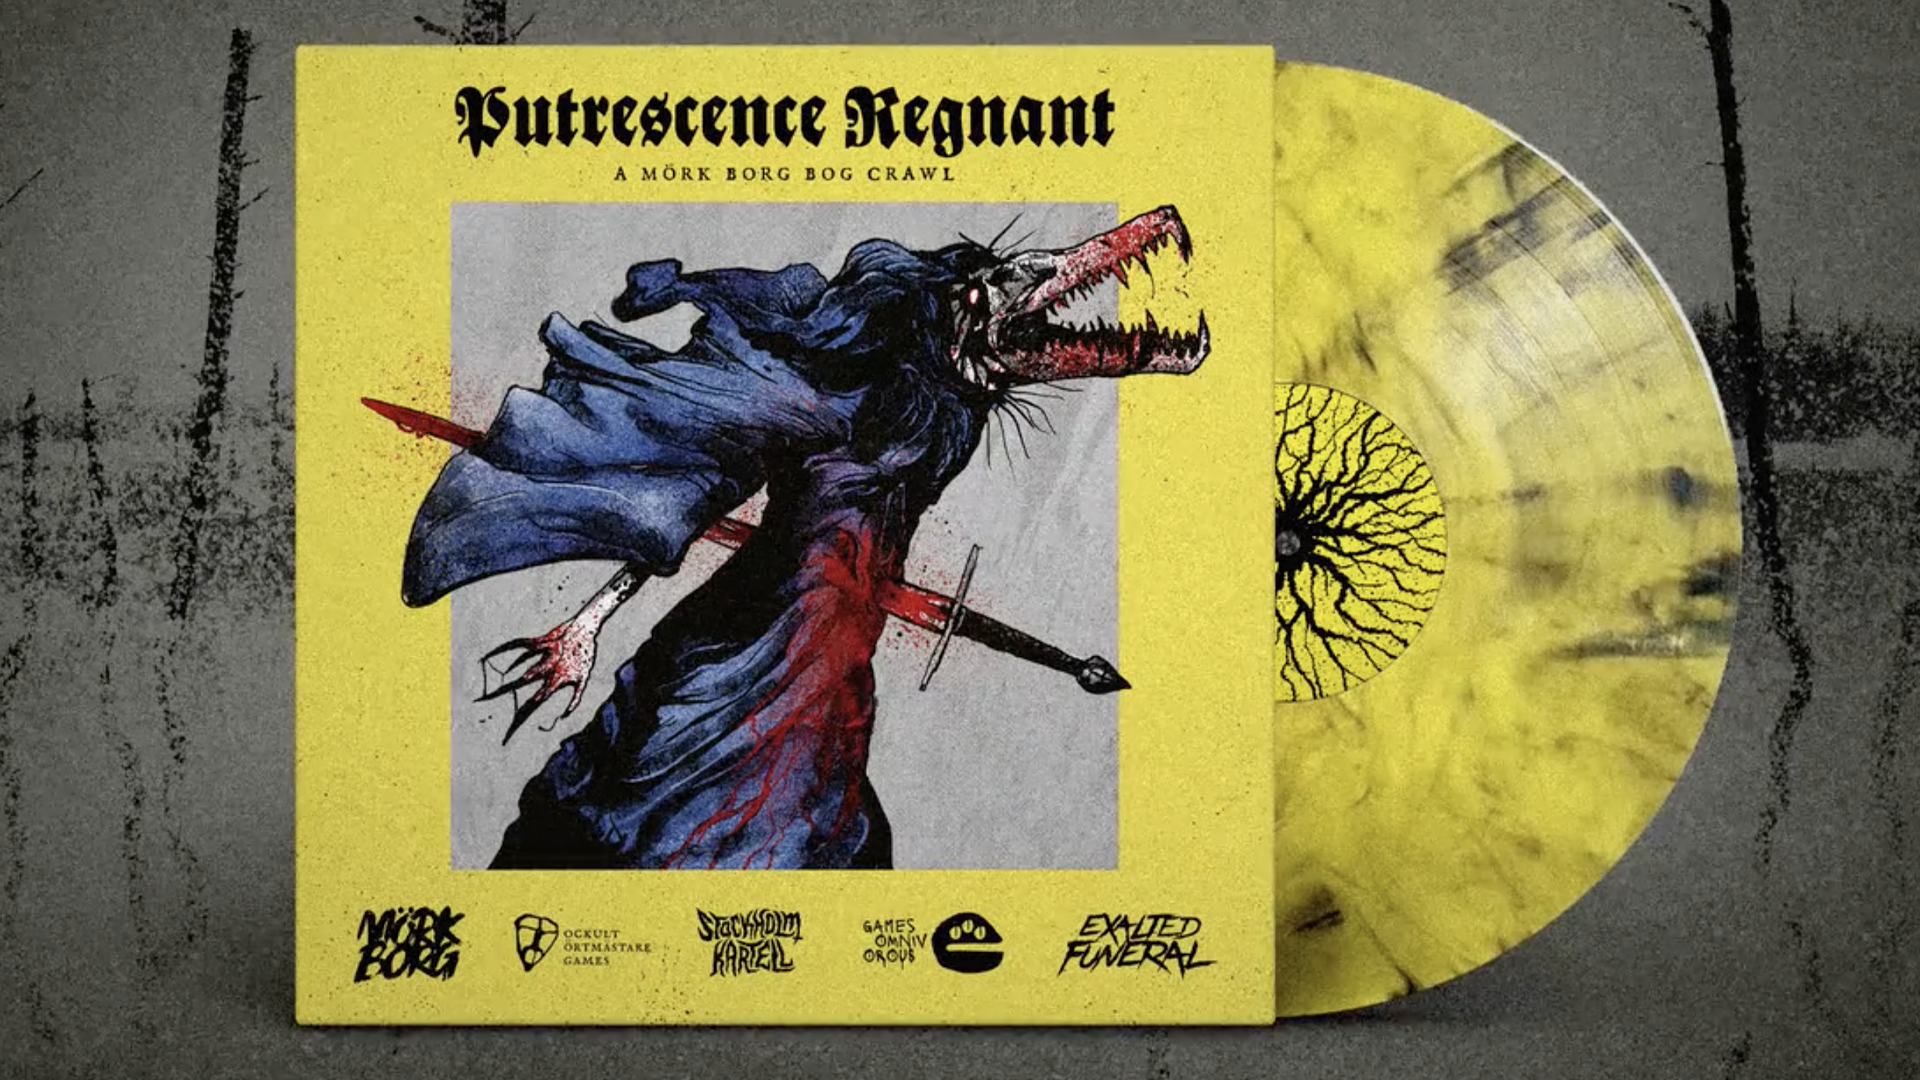 Image for Mörk Borg’s Putrescence Regnant is a grim ‘bog crawl’ adventure releasing as a vinyl music album